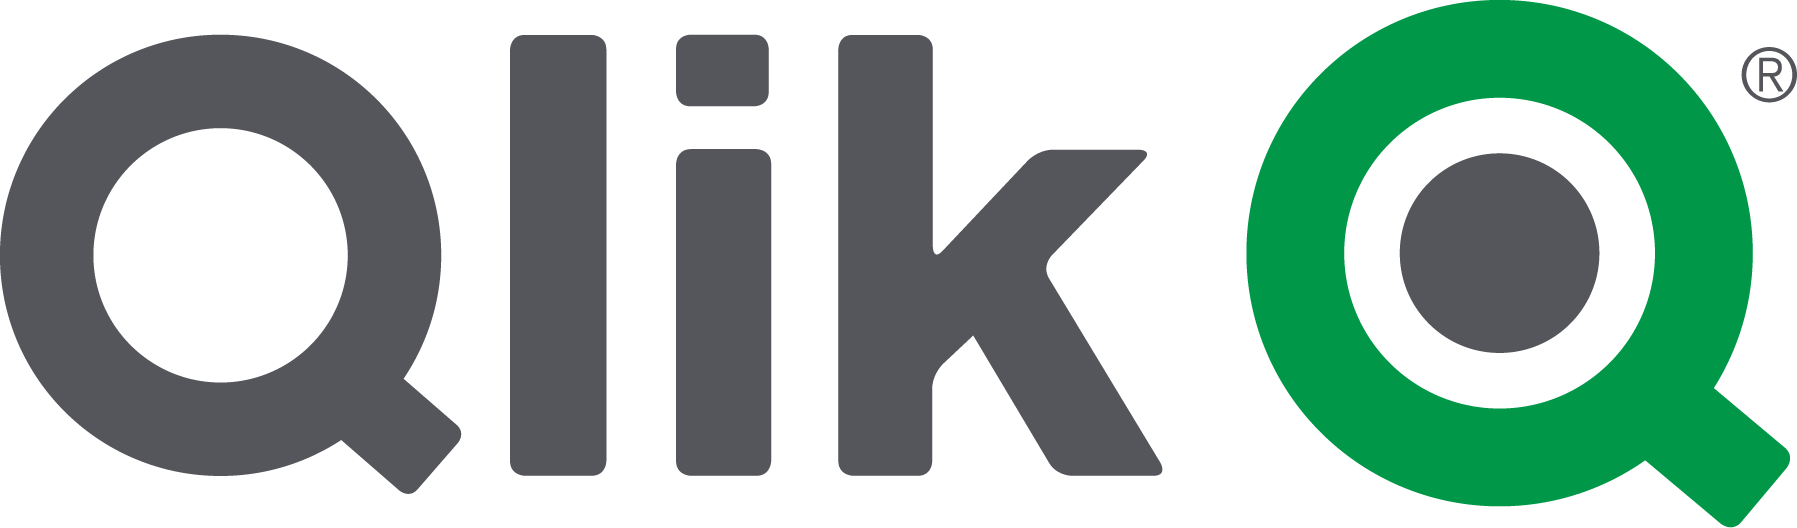 a logo of Qlik